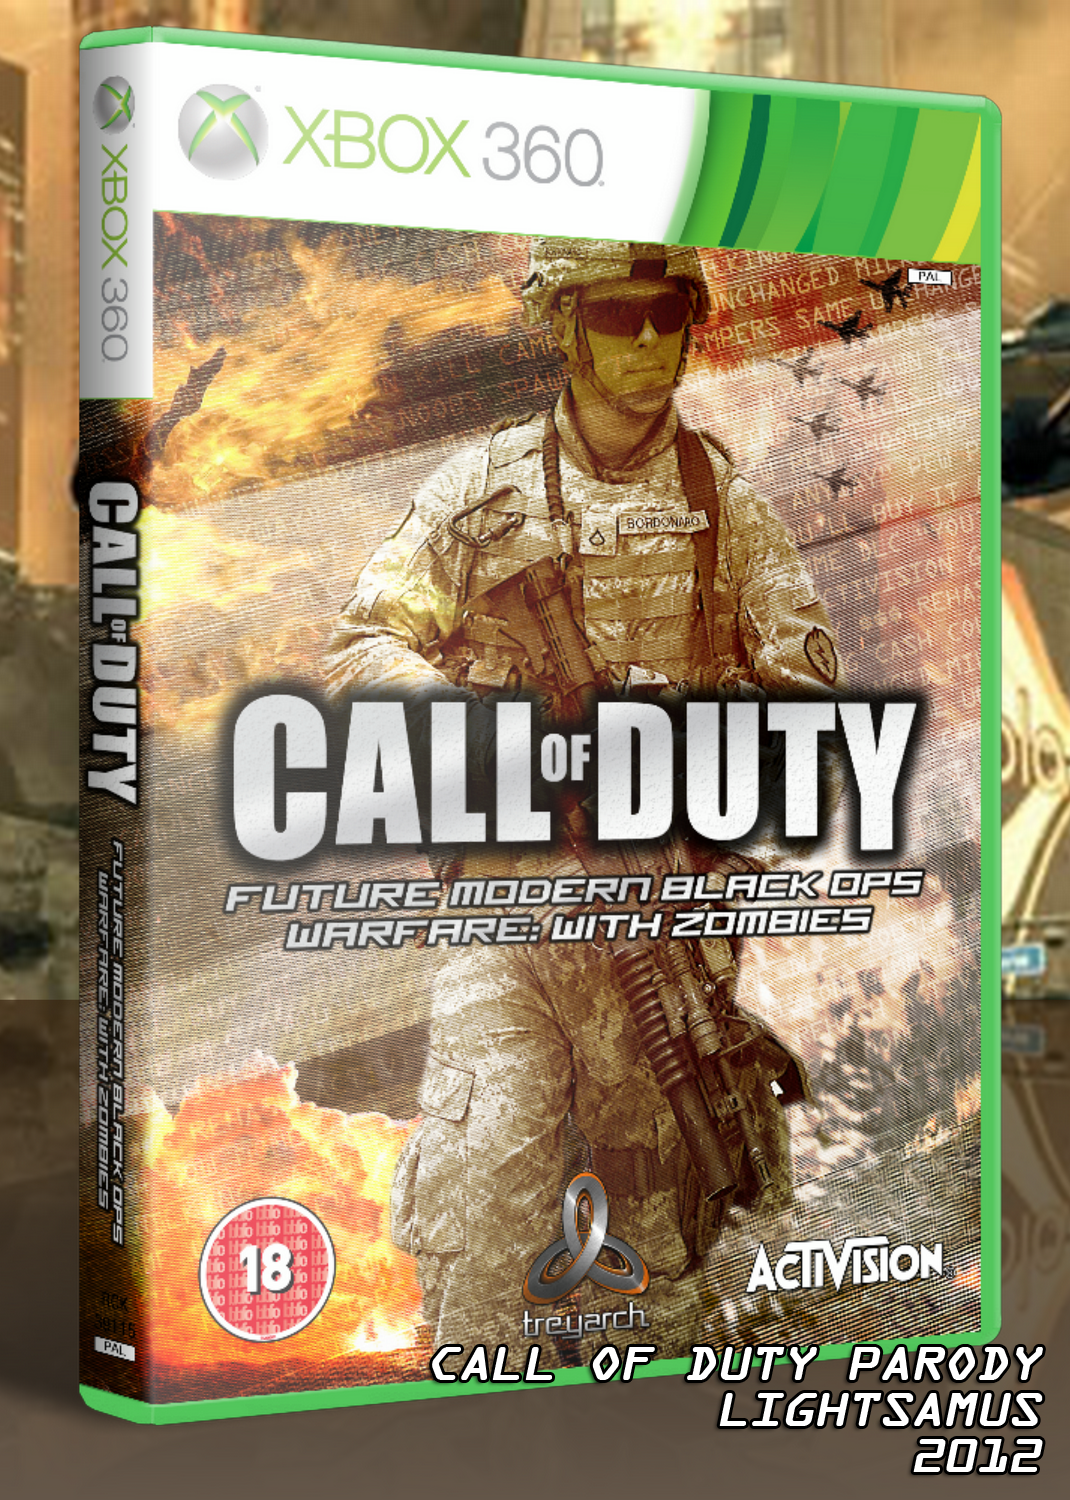 Call of Duty: Future Modern Black Ops Warfare box cover